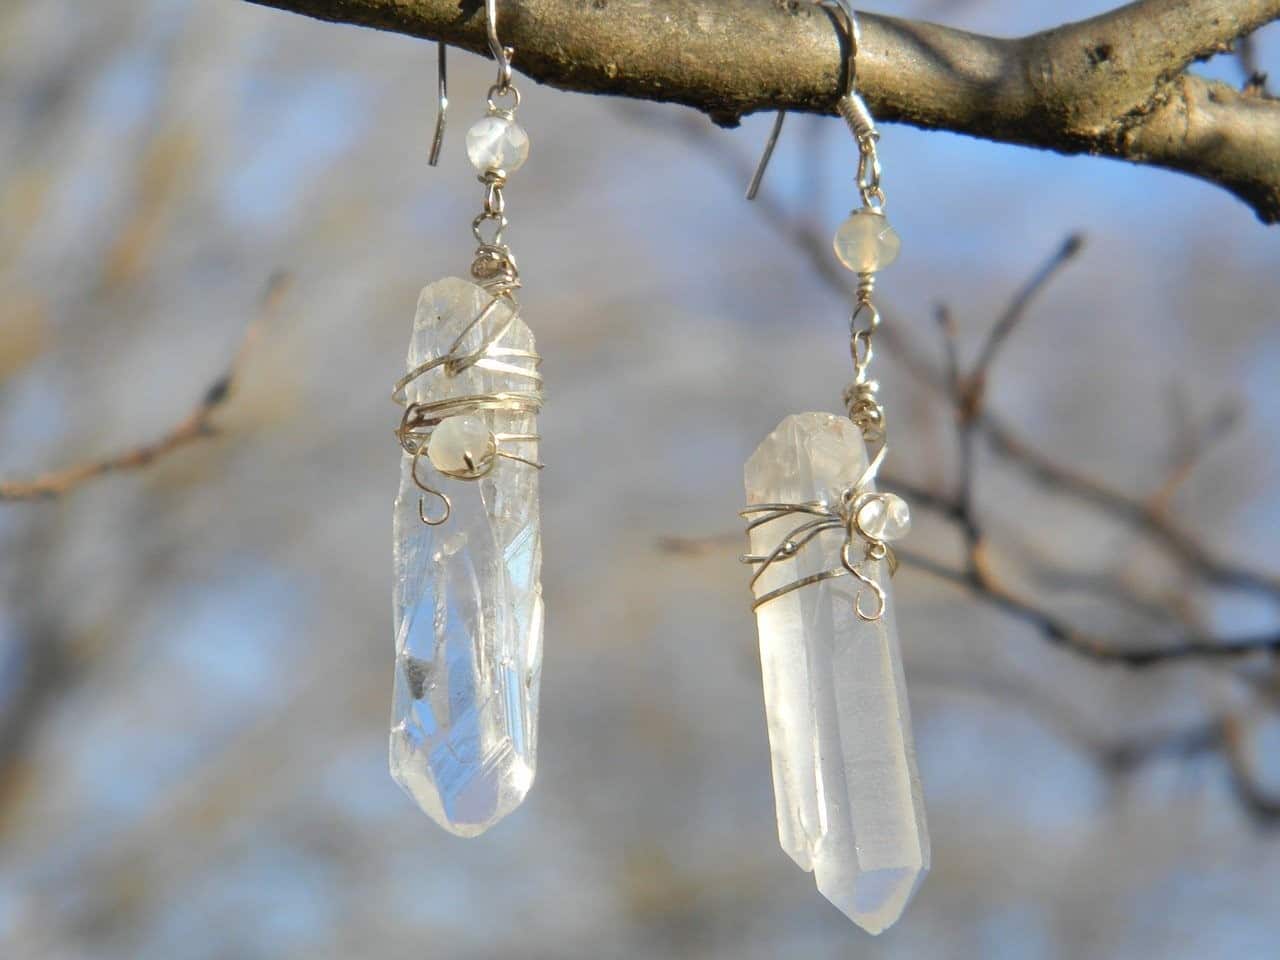 crystals hanging spells